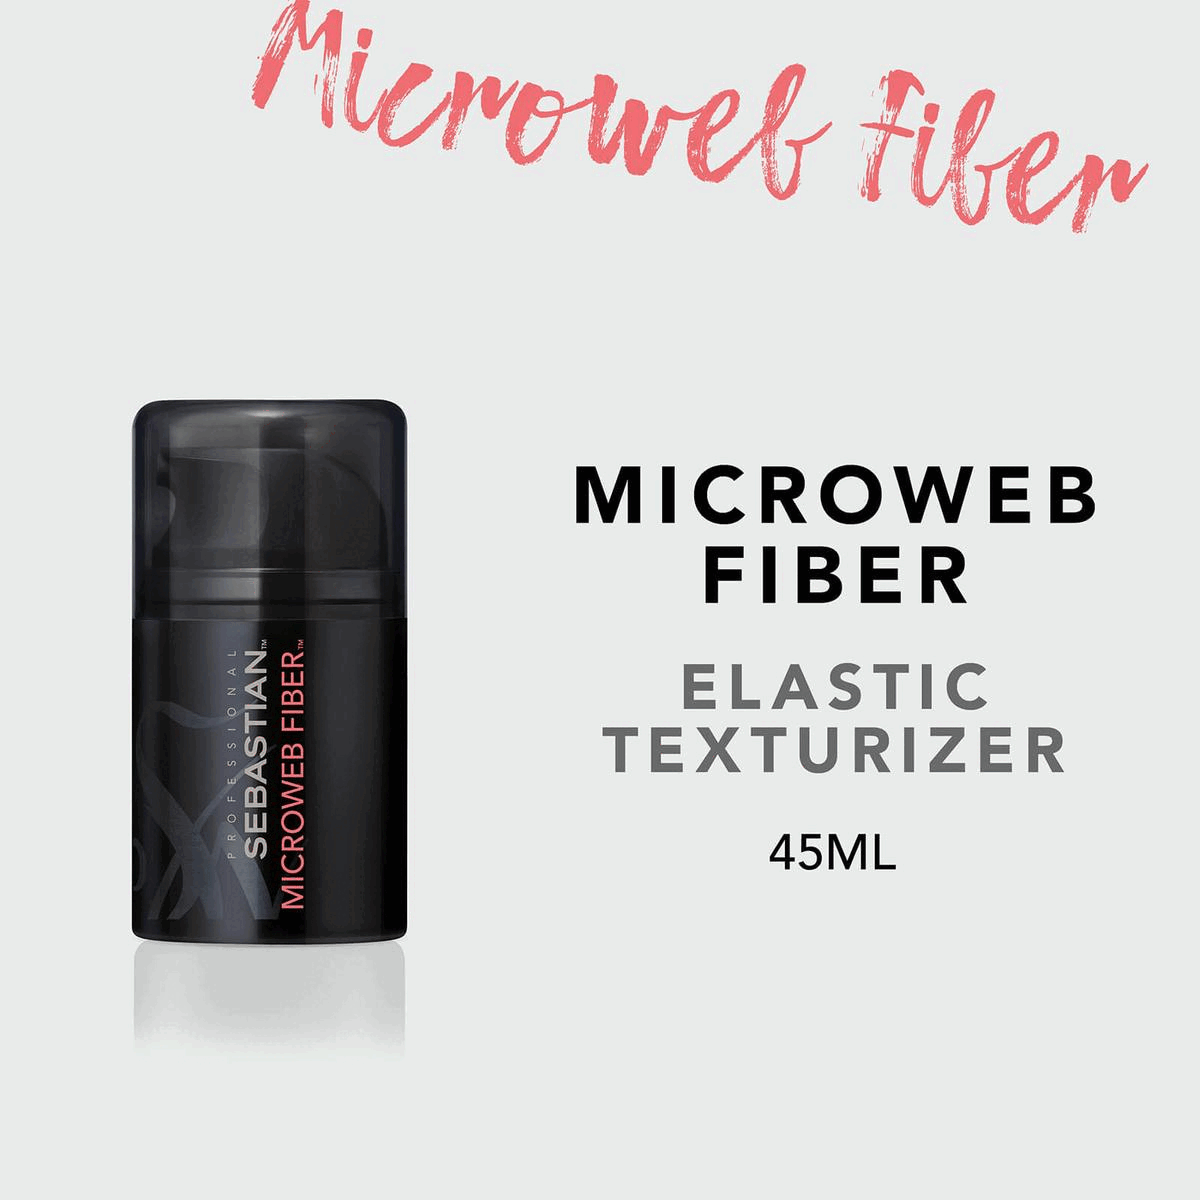 Microweb fiber Elastic Texturiser 45ml. Remouldable Soft feel with silky web fibers Elastic texture